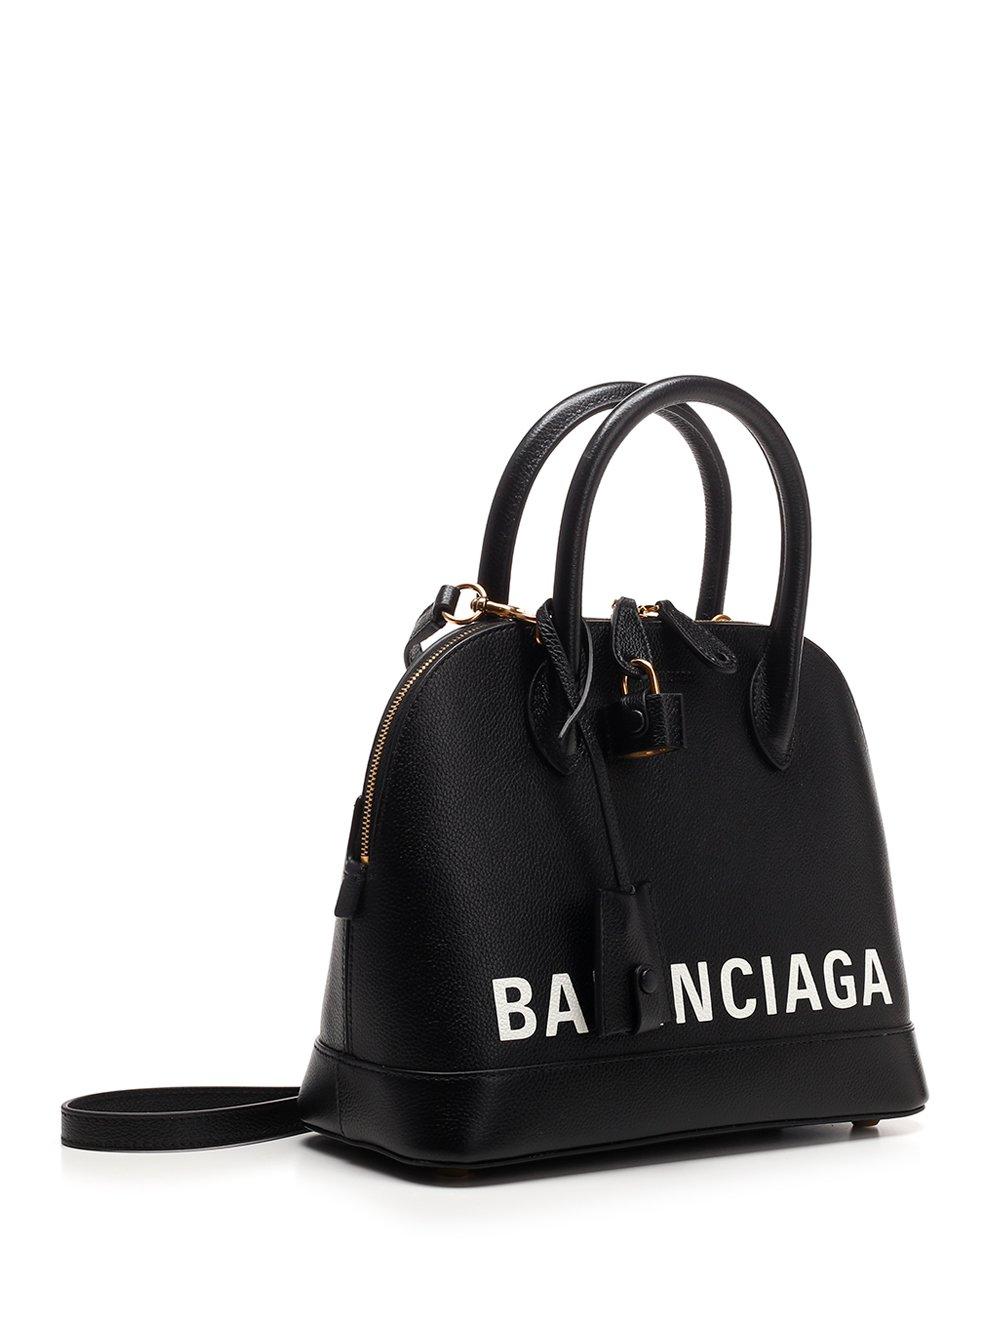 Balenciaga Ville Small Leather Handbag in Black / White (Black 